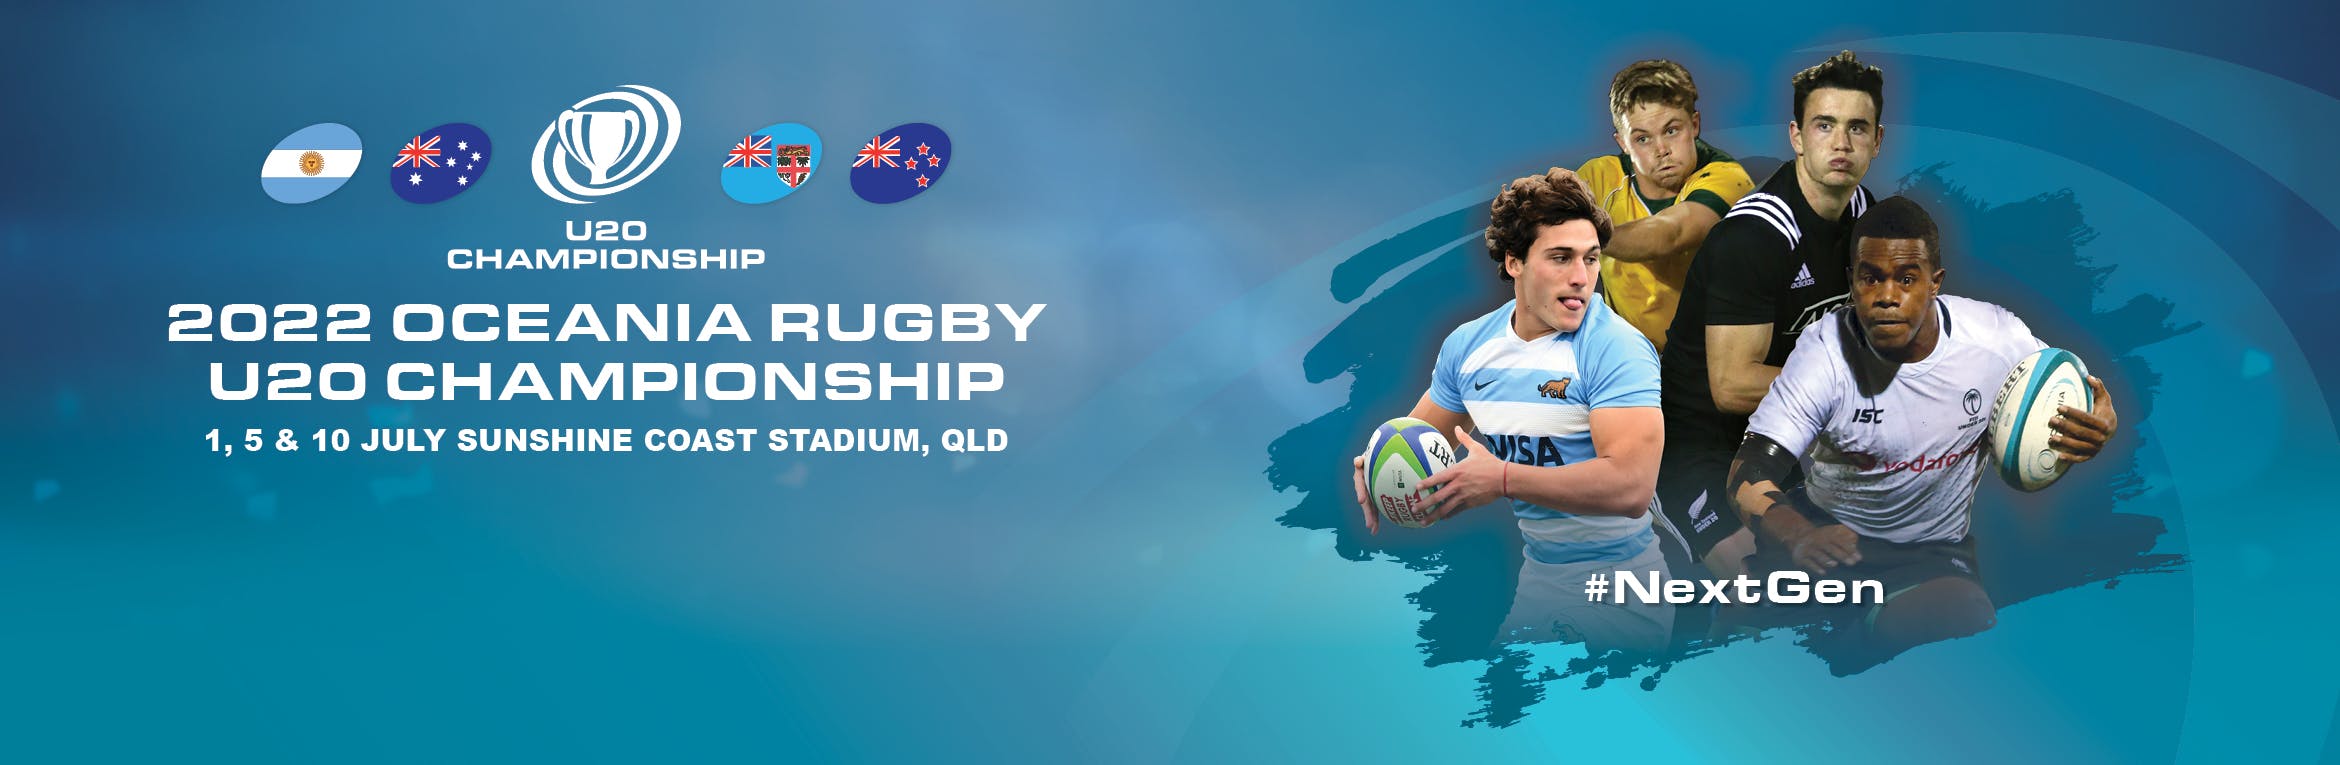 2022 Oceania Rugby U20 Championship